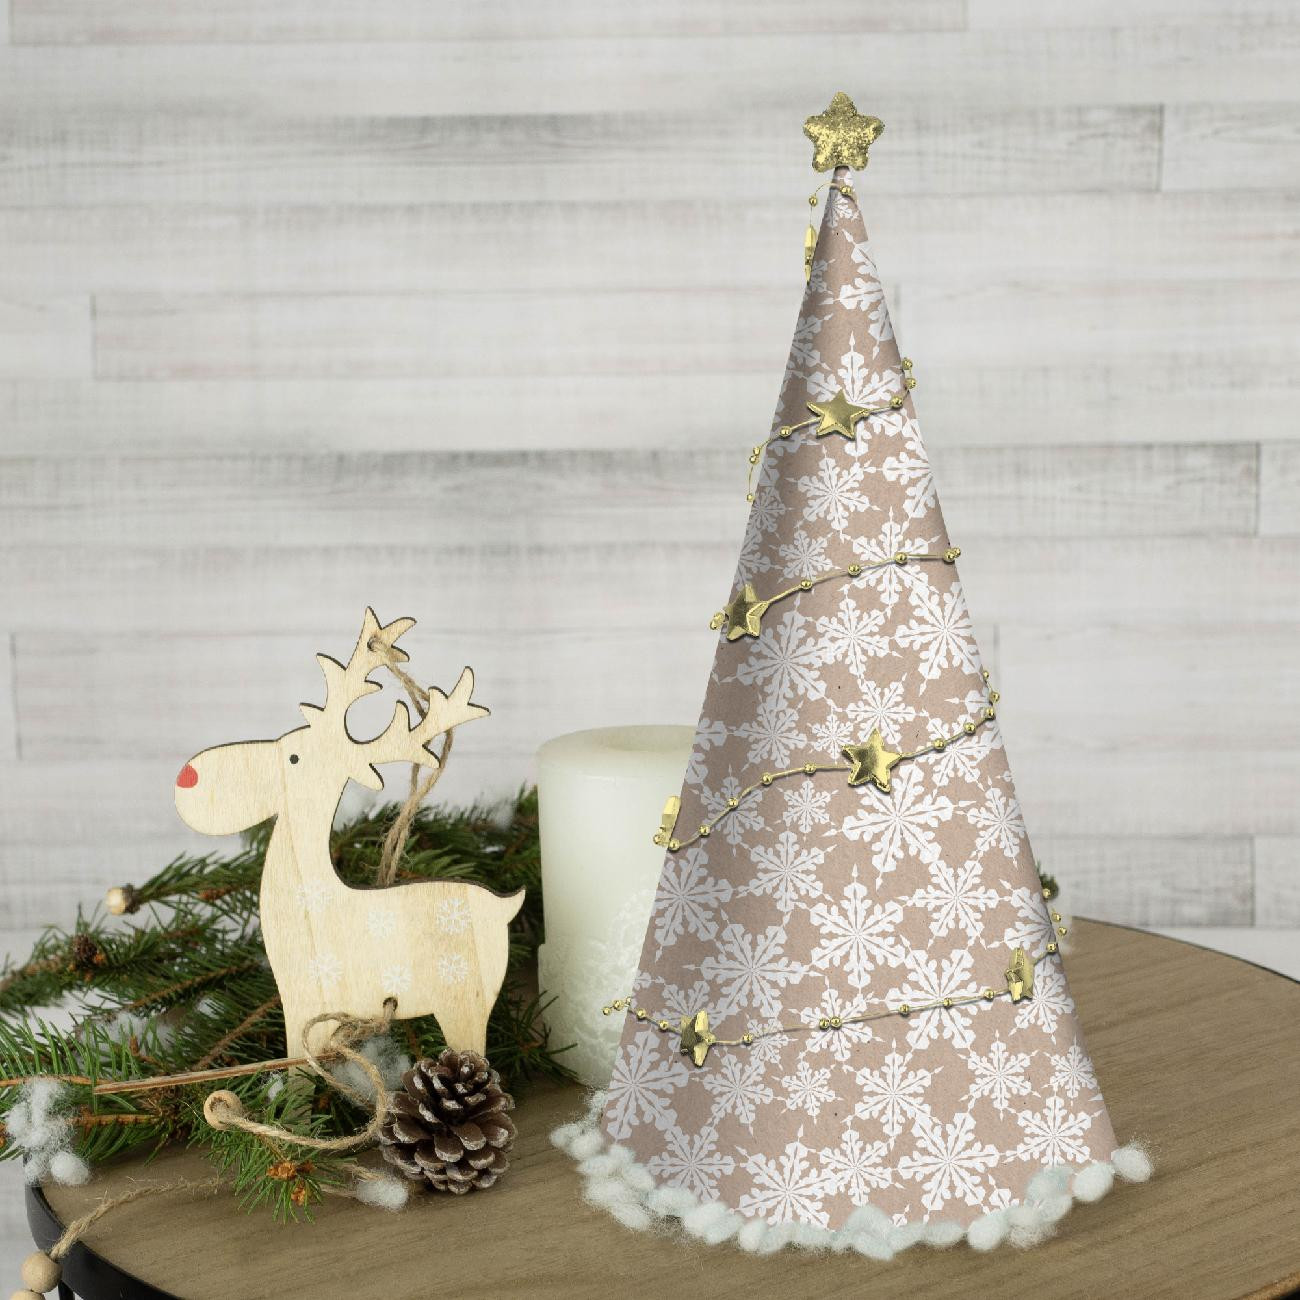 CHRISTMAS TREE - PAPER SNOWFLAKES (WHITE CHRISTMAS) - DIY IT'S EASY